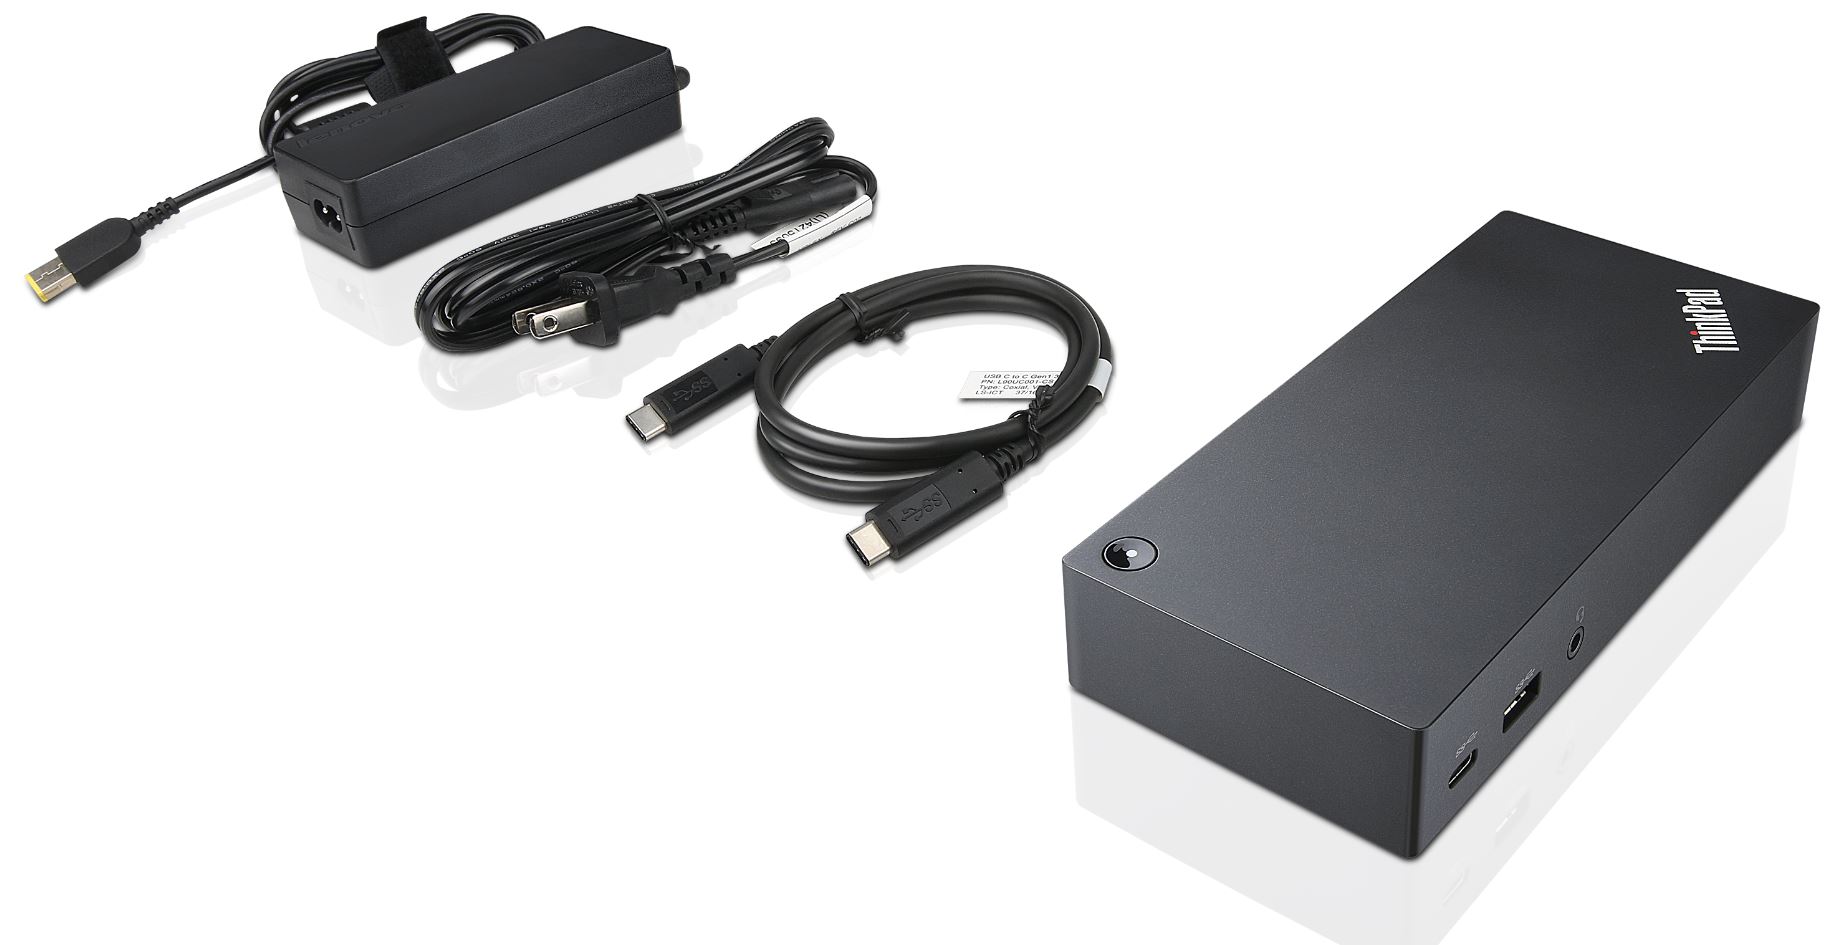 bilag Gensidig arkiv ThinkPad USB-C Dock - Overview and Service Parts - Lenovo Support US